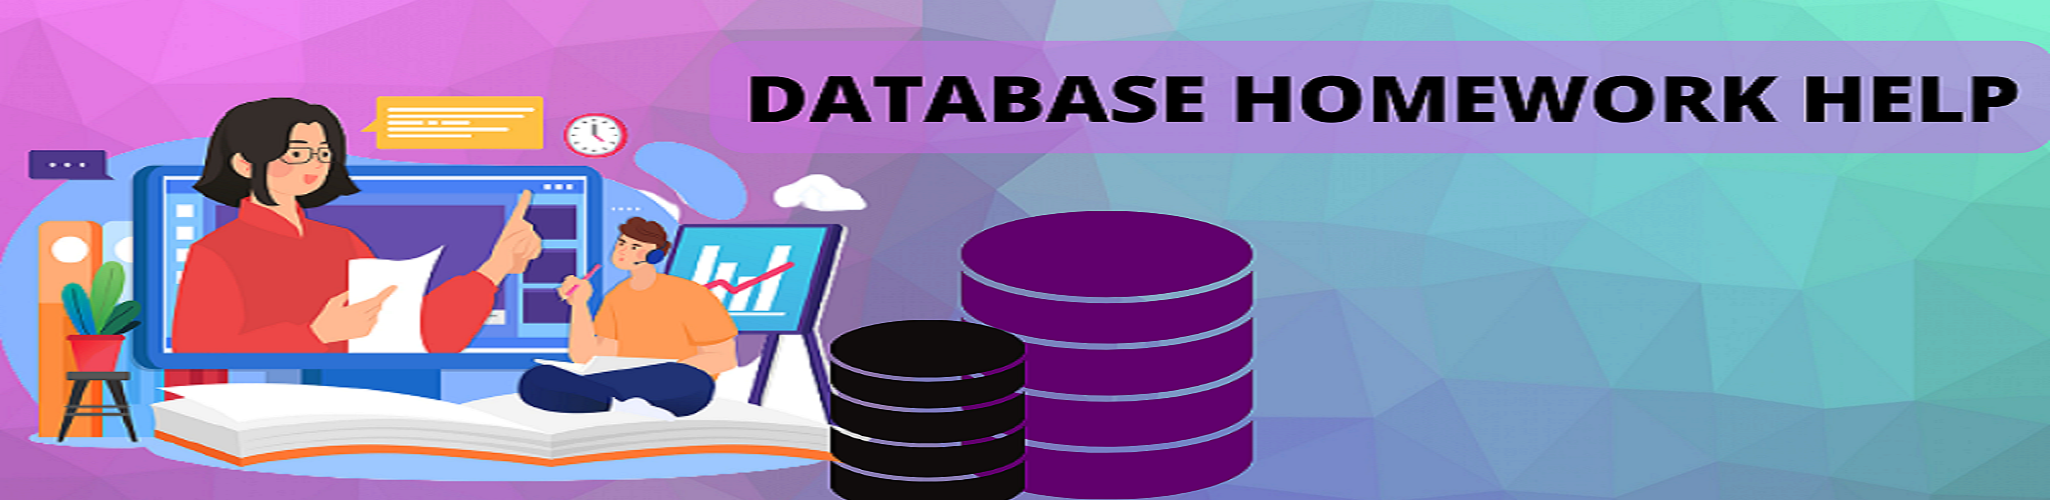 Database Homework Help cover